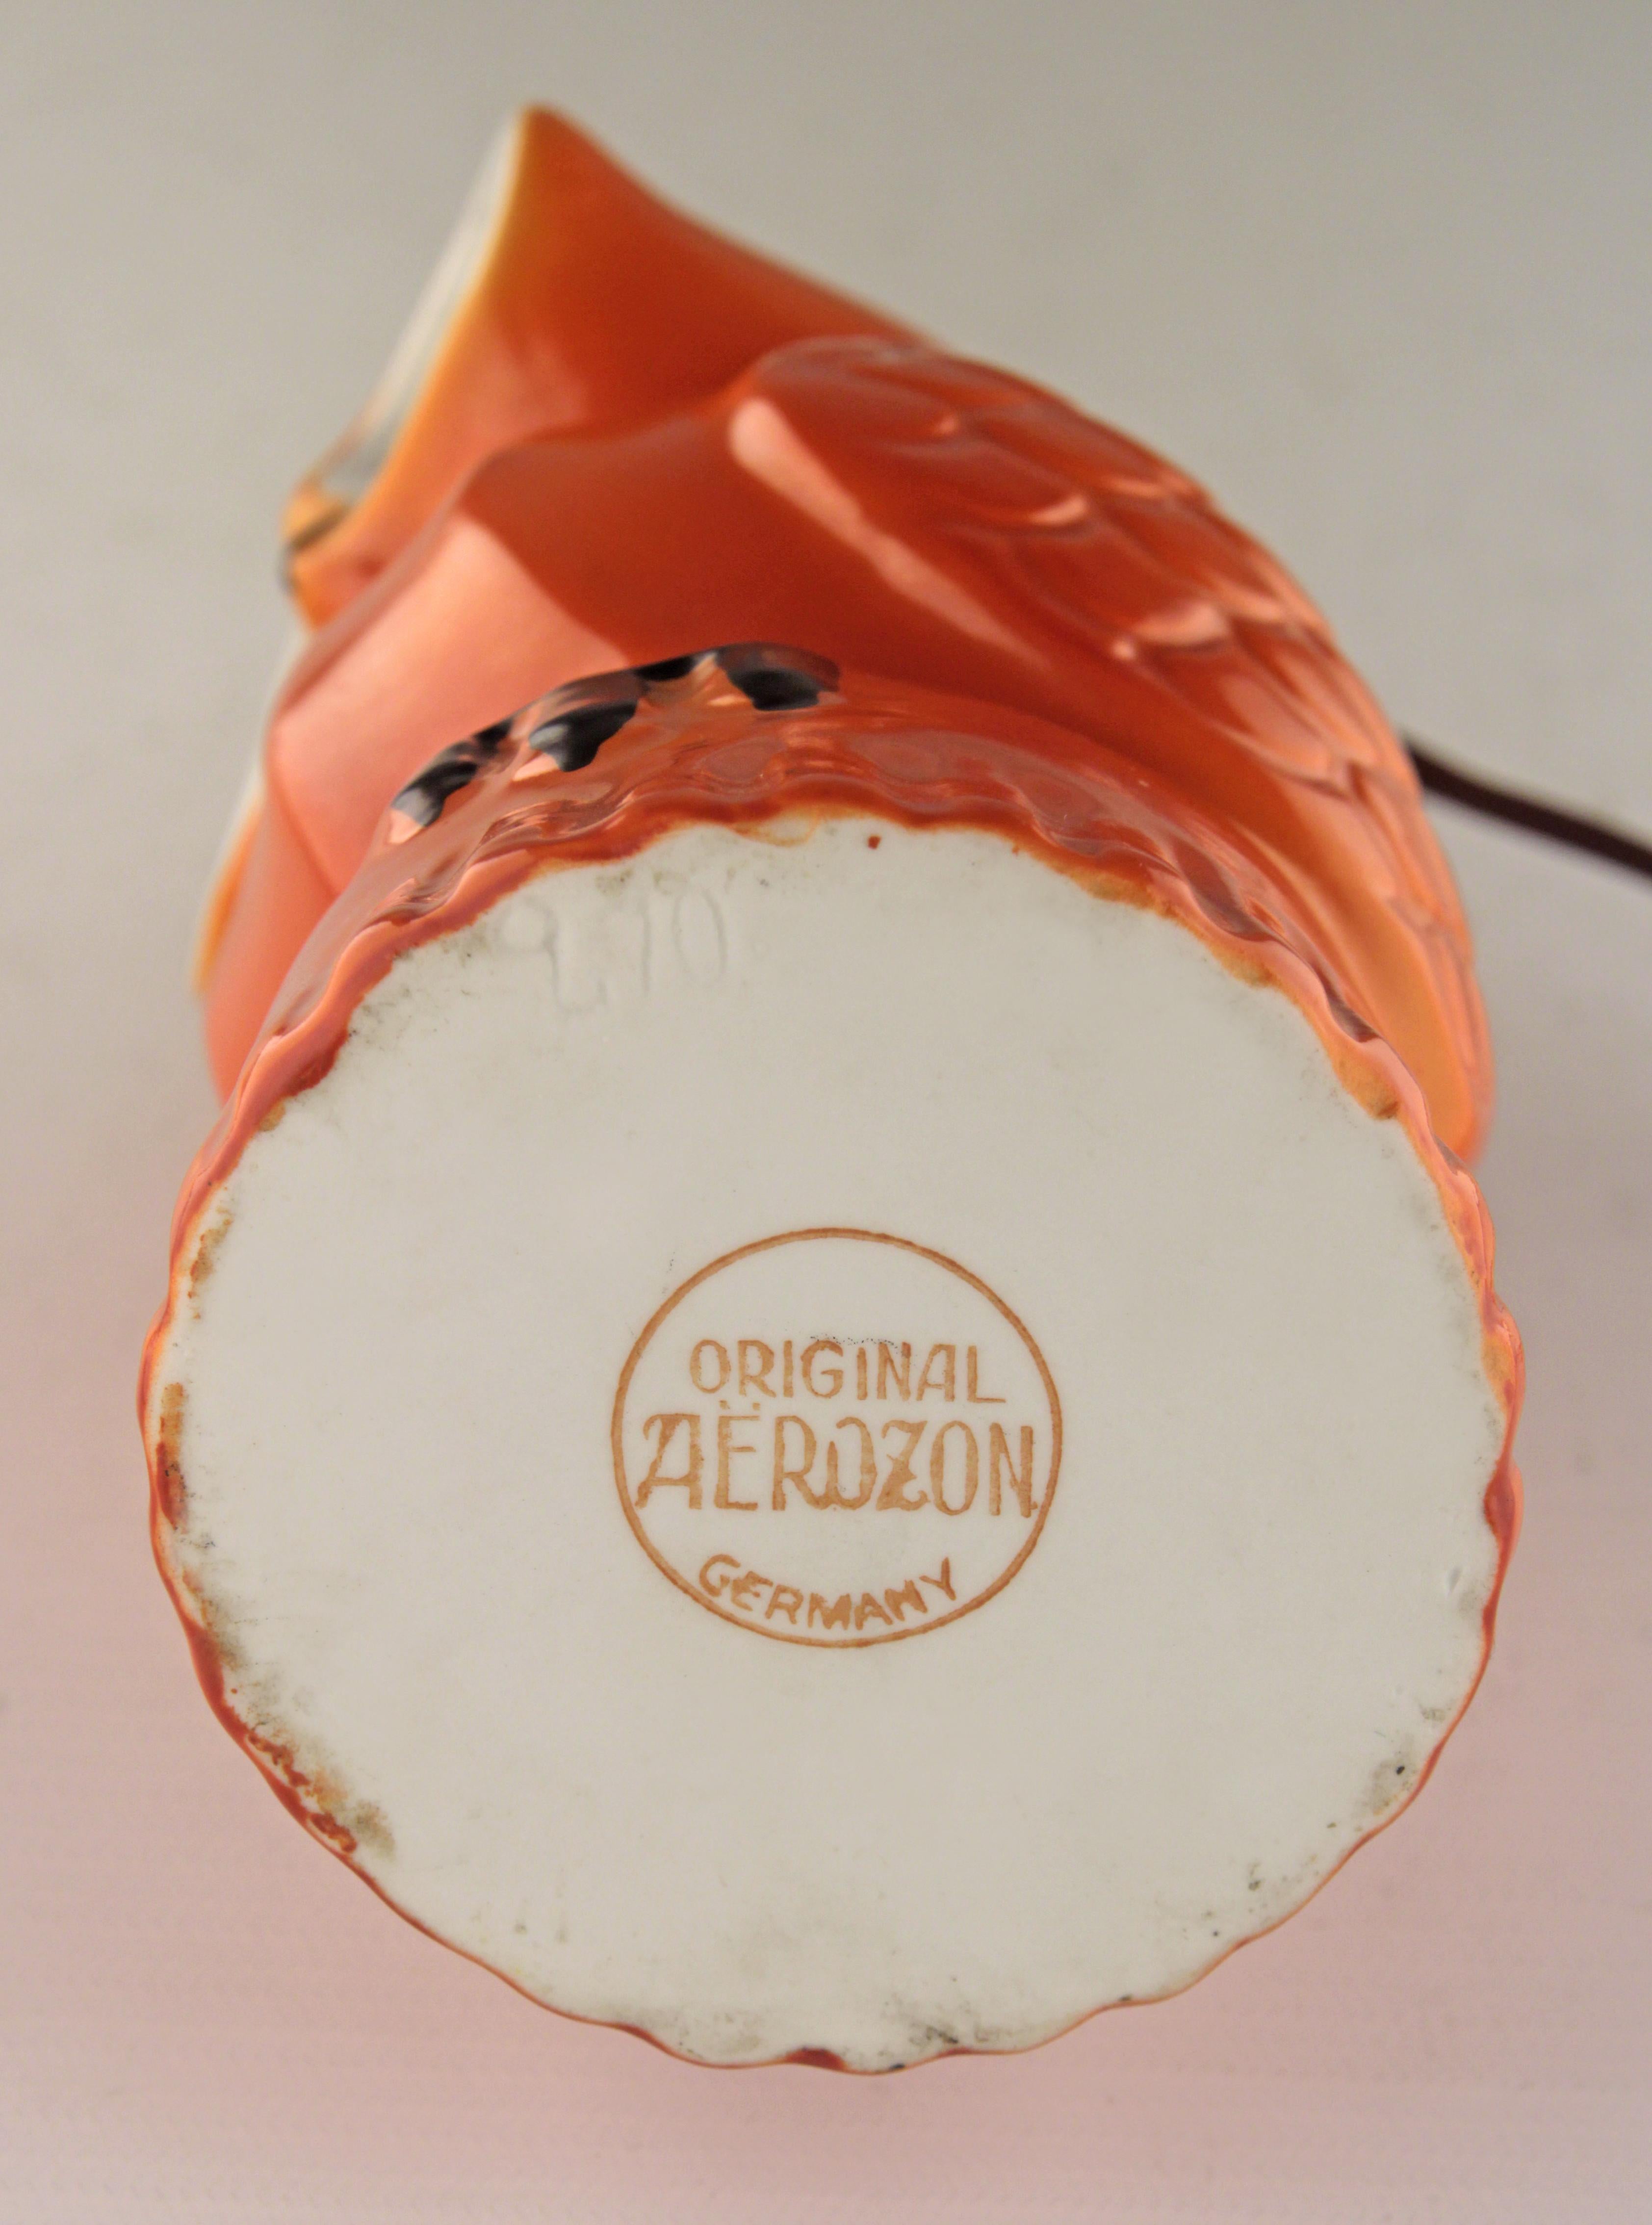 Art Déco Enameled Porcelain Owl-Shapped Perfume Lamp by German Company Aerozon For Sale 2